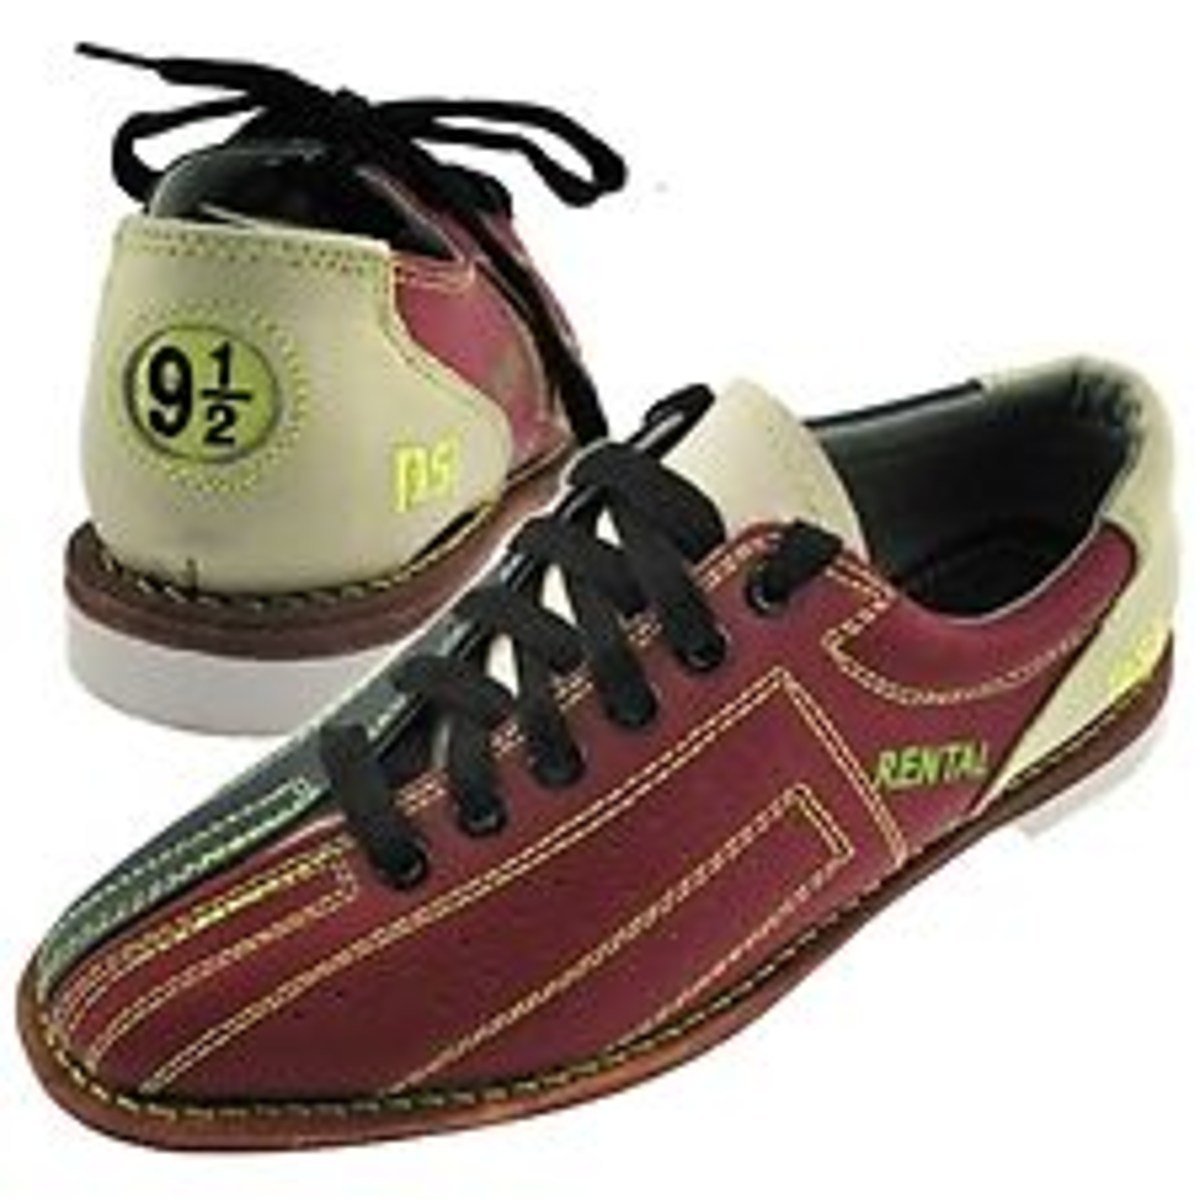 Bowling Shoes 3g